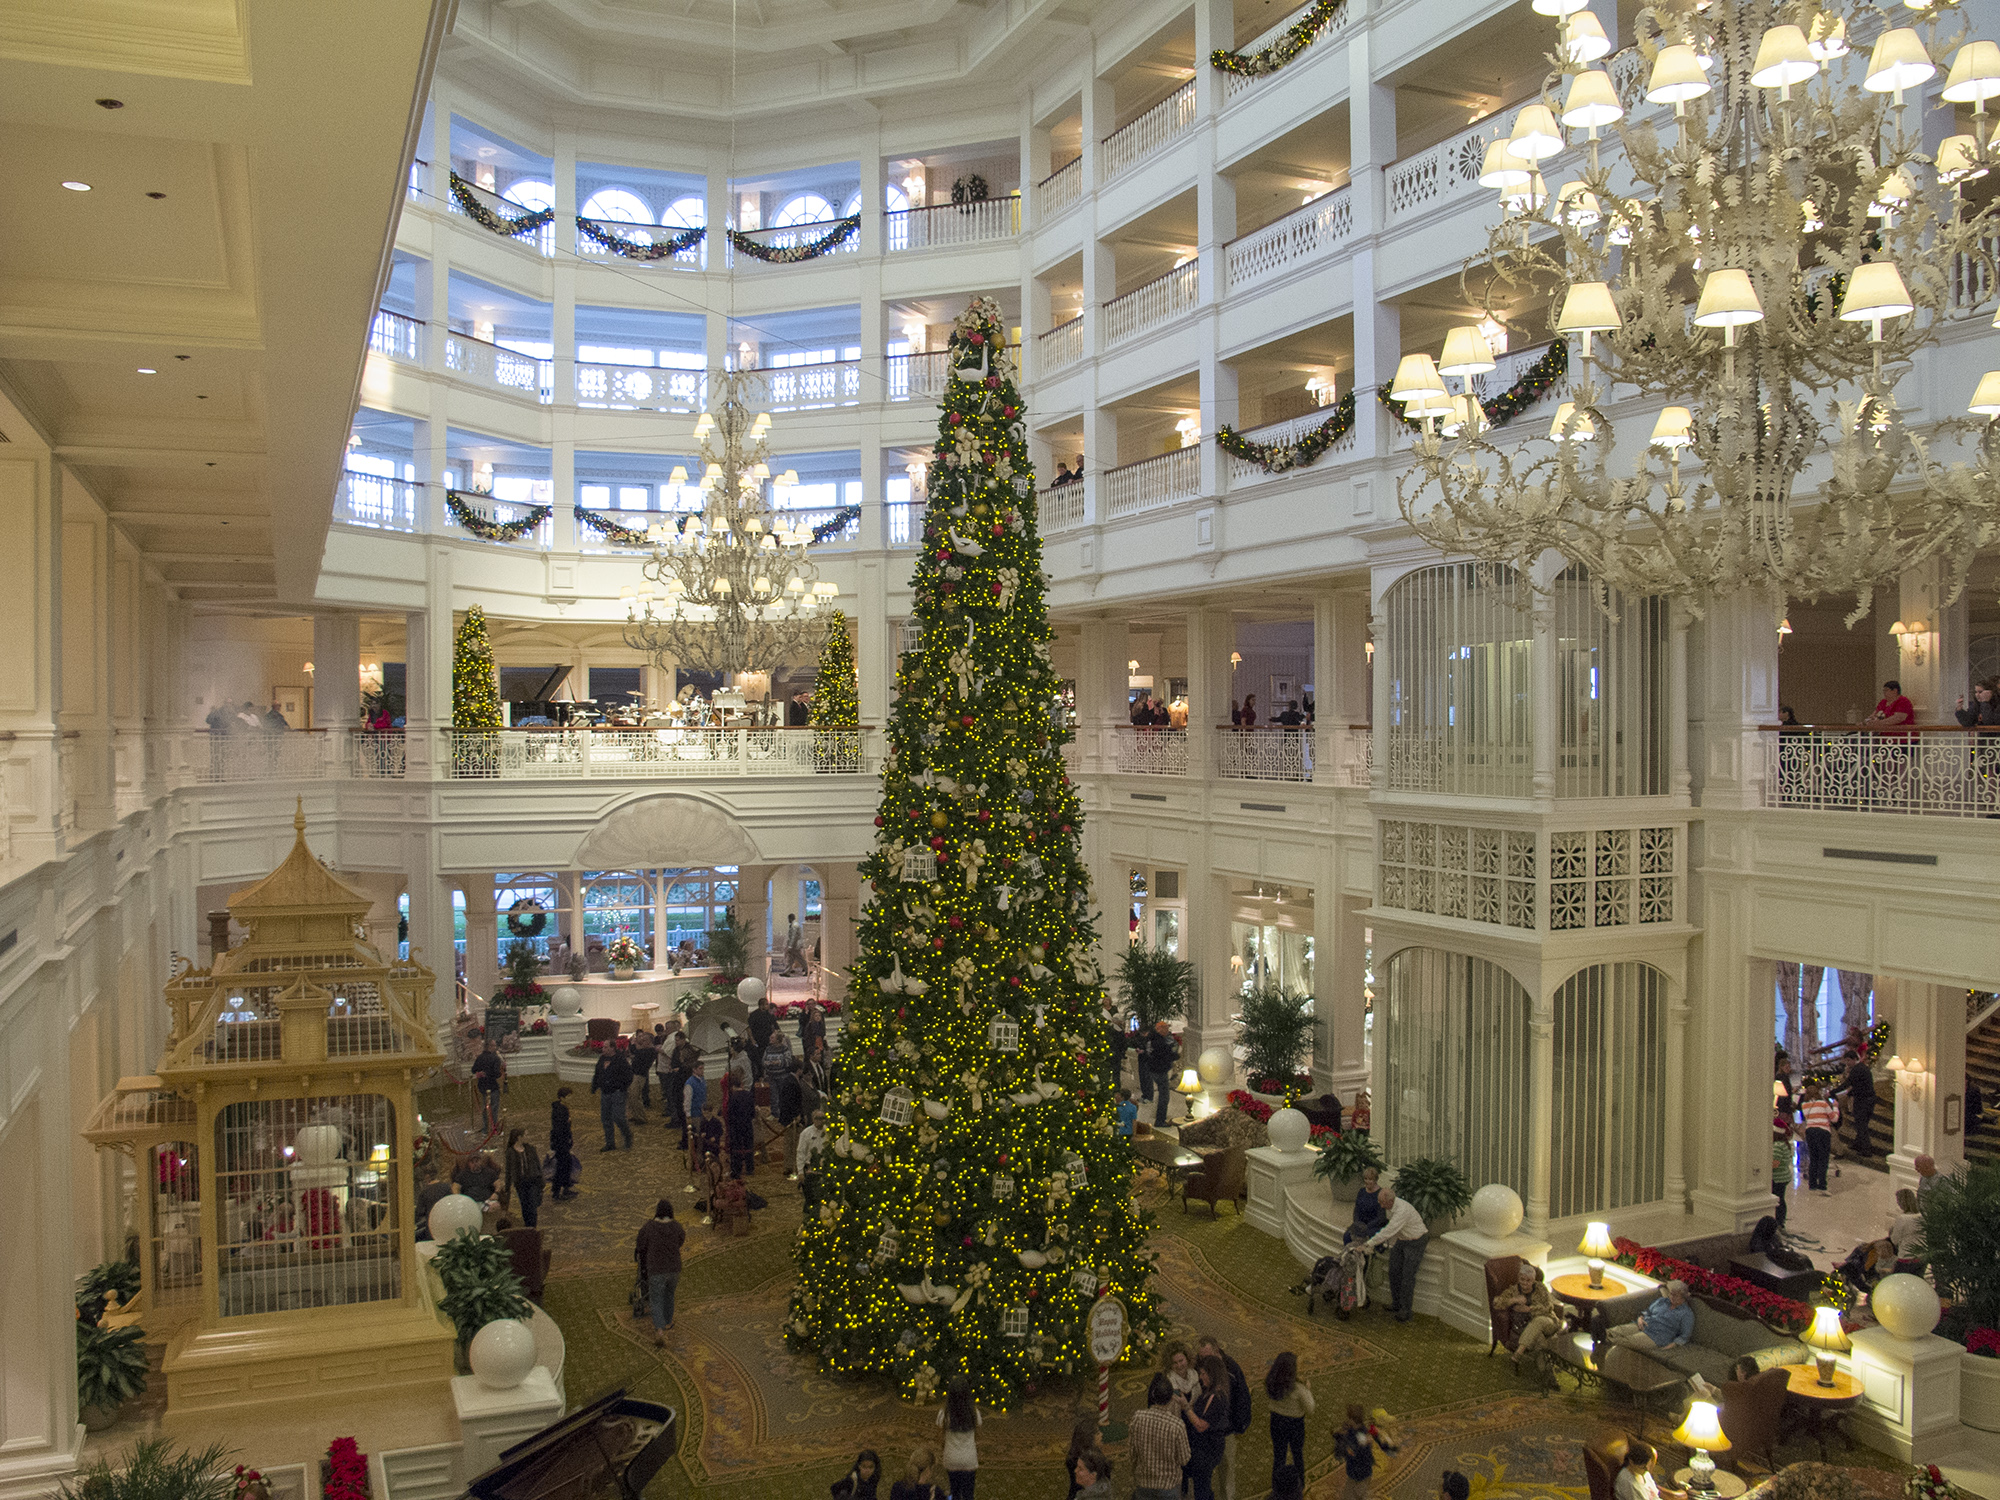 Grand Floridian lobby at Christmas